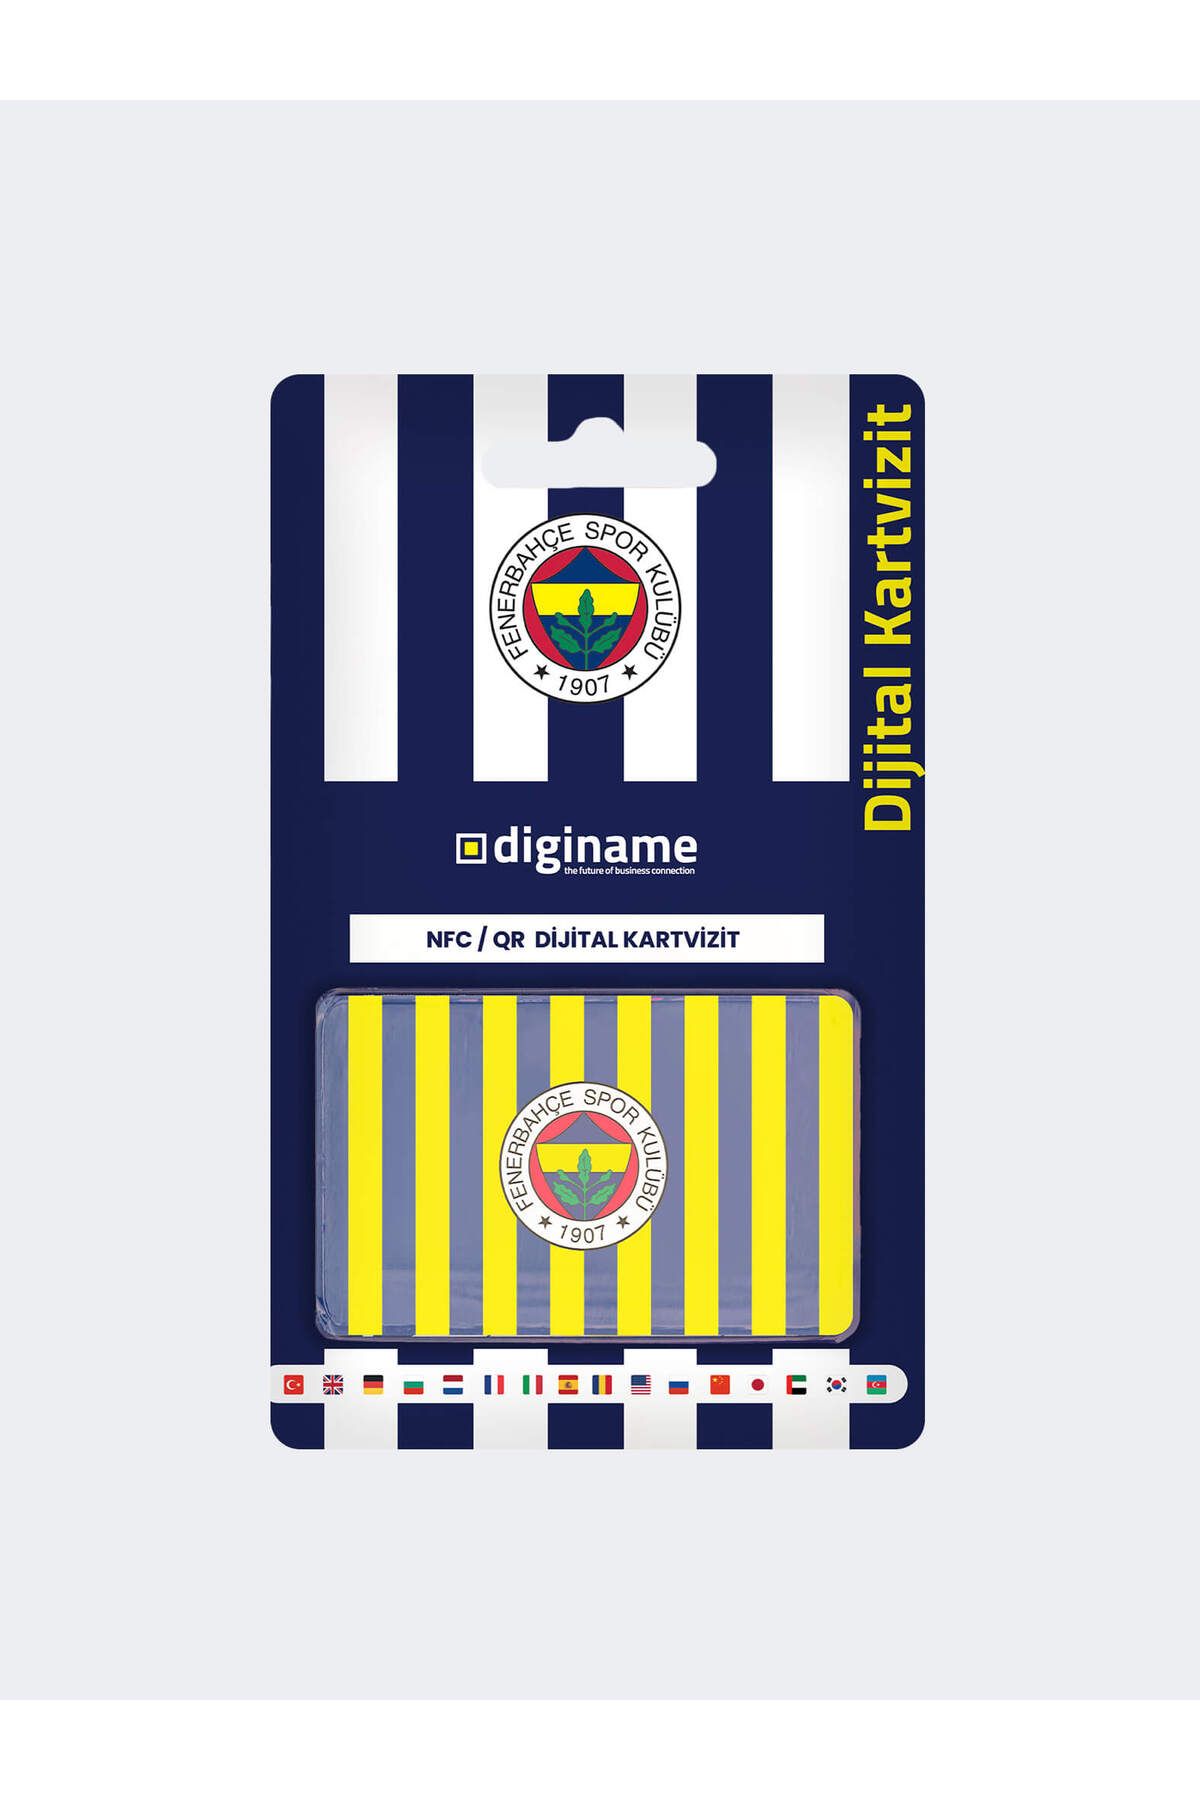 Fenerbahçe FB DIJITAL KARTVIZIT NFC QR TEKNOLOJI